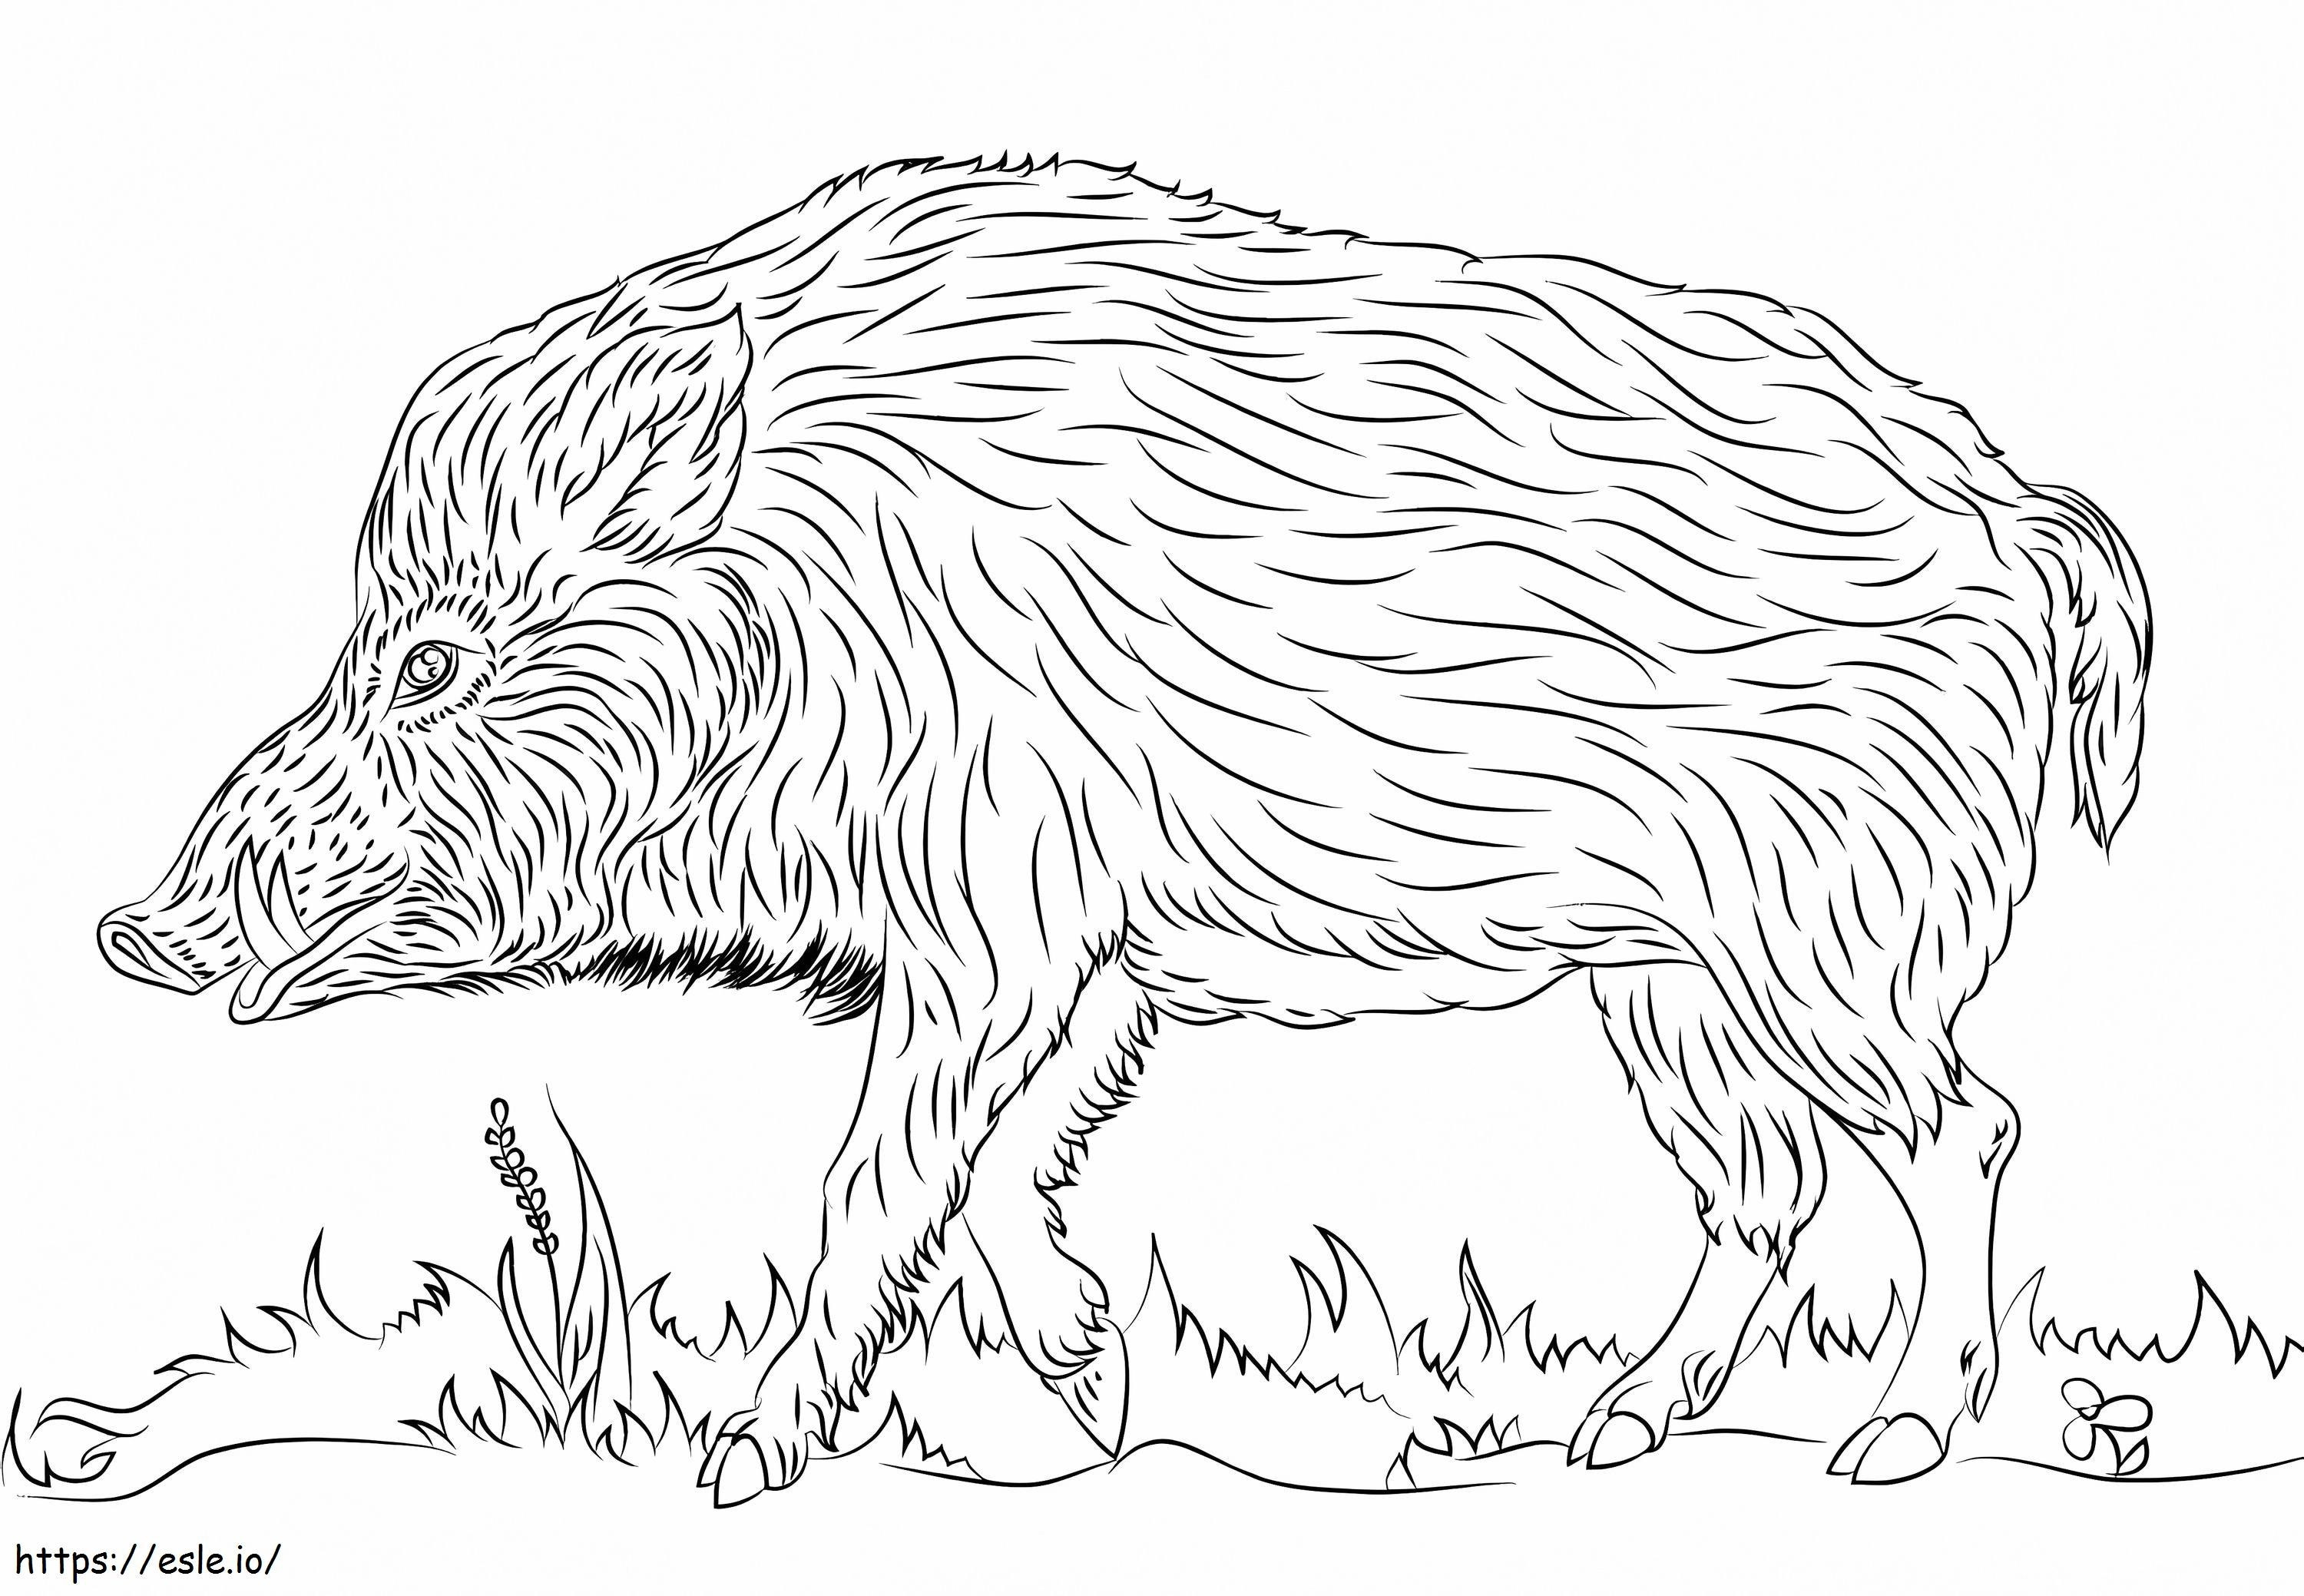 A Wild Boar coloring page